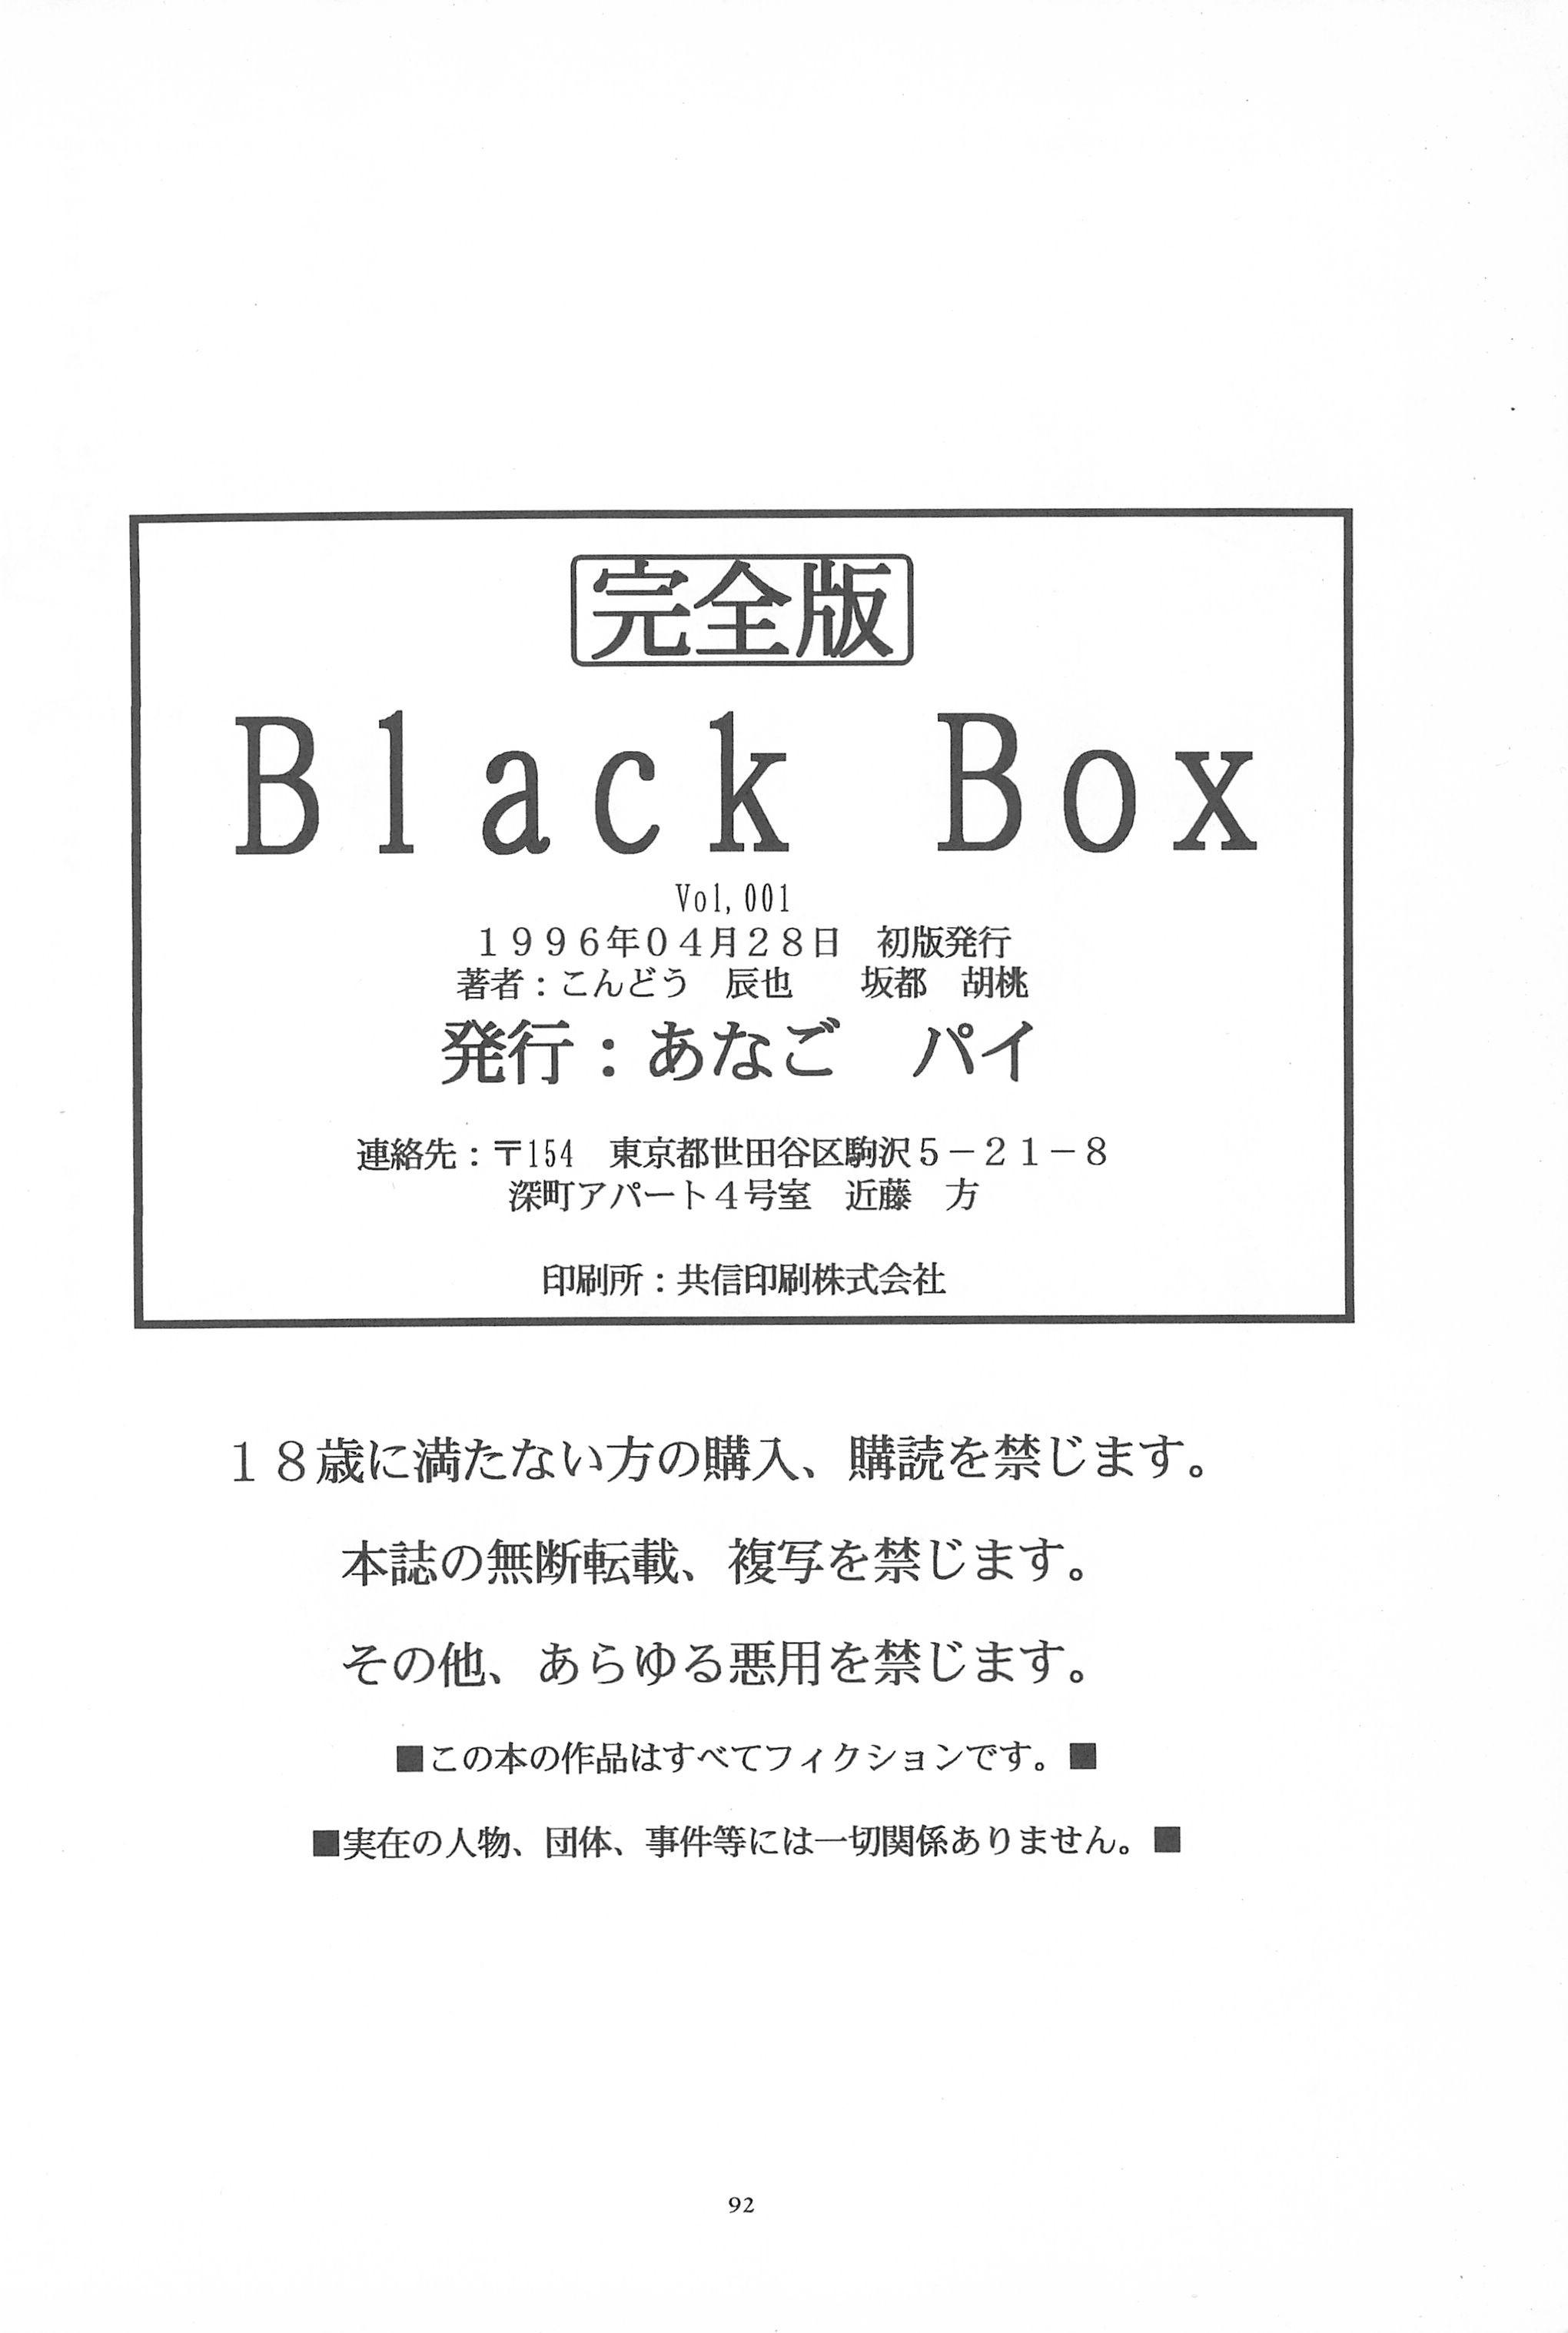 Black Box Vol. 001 Kanzenban 91